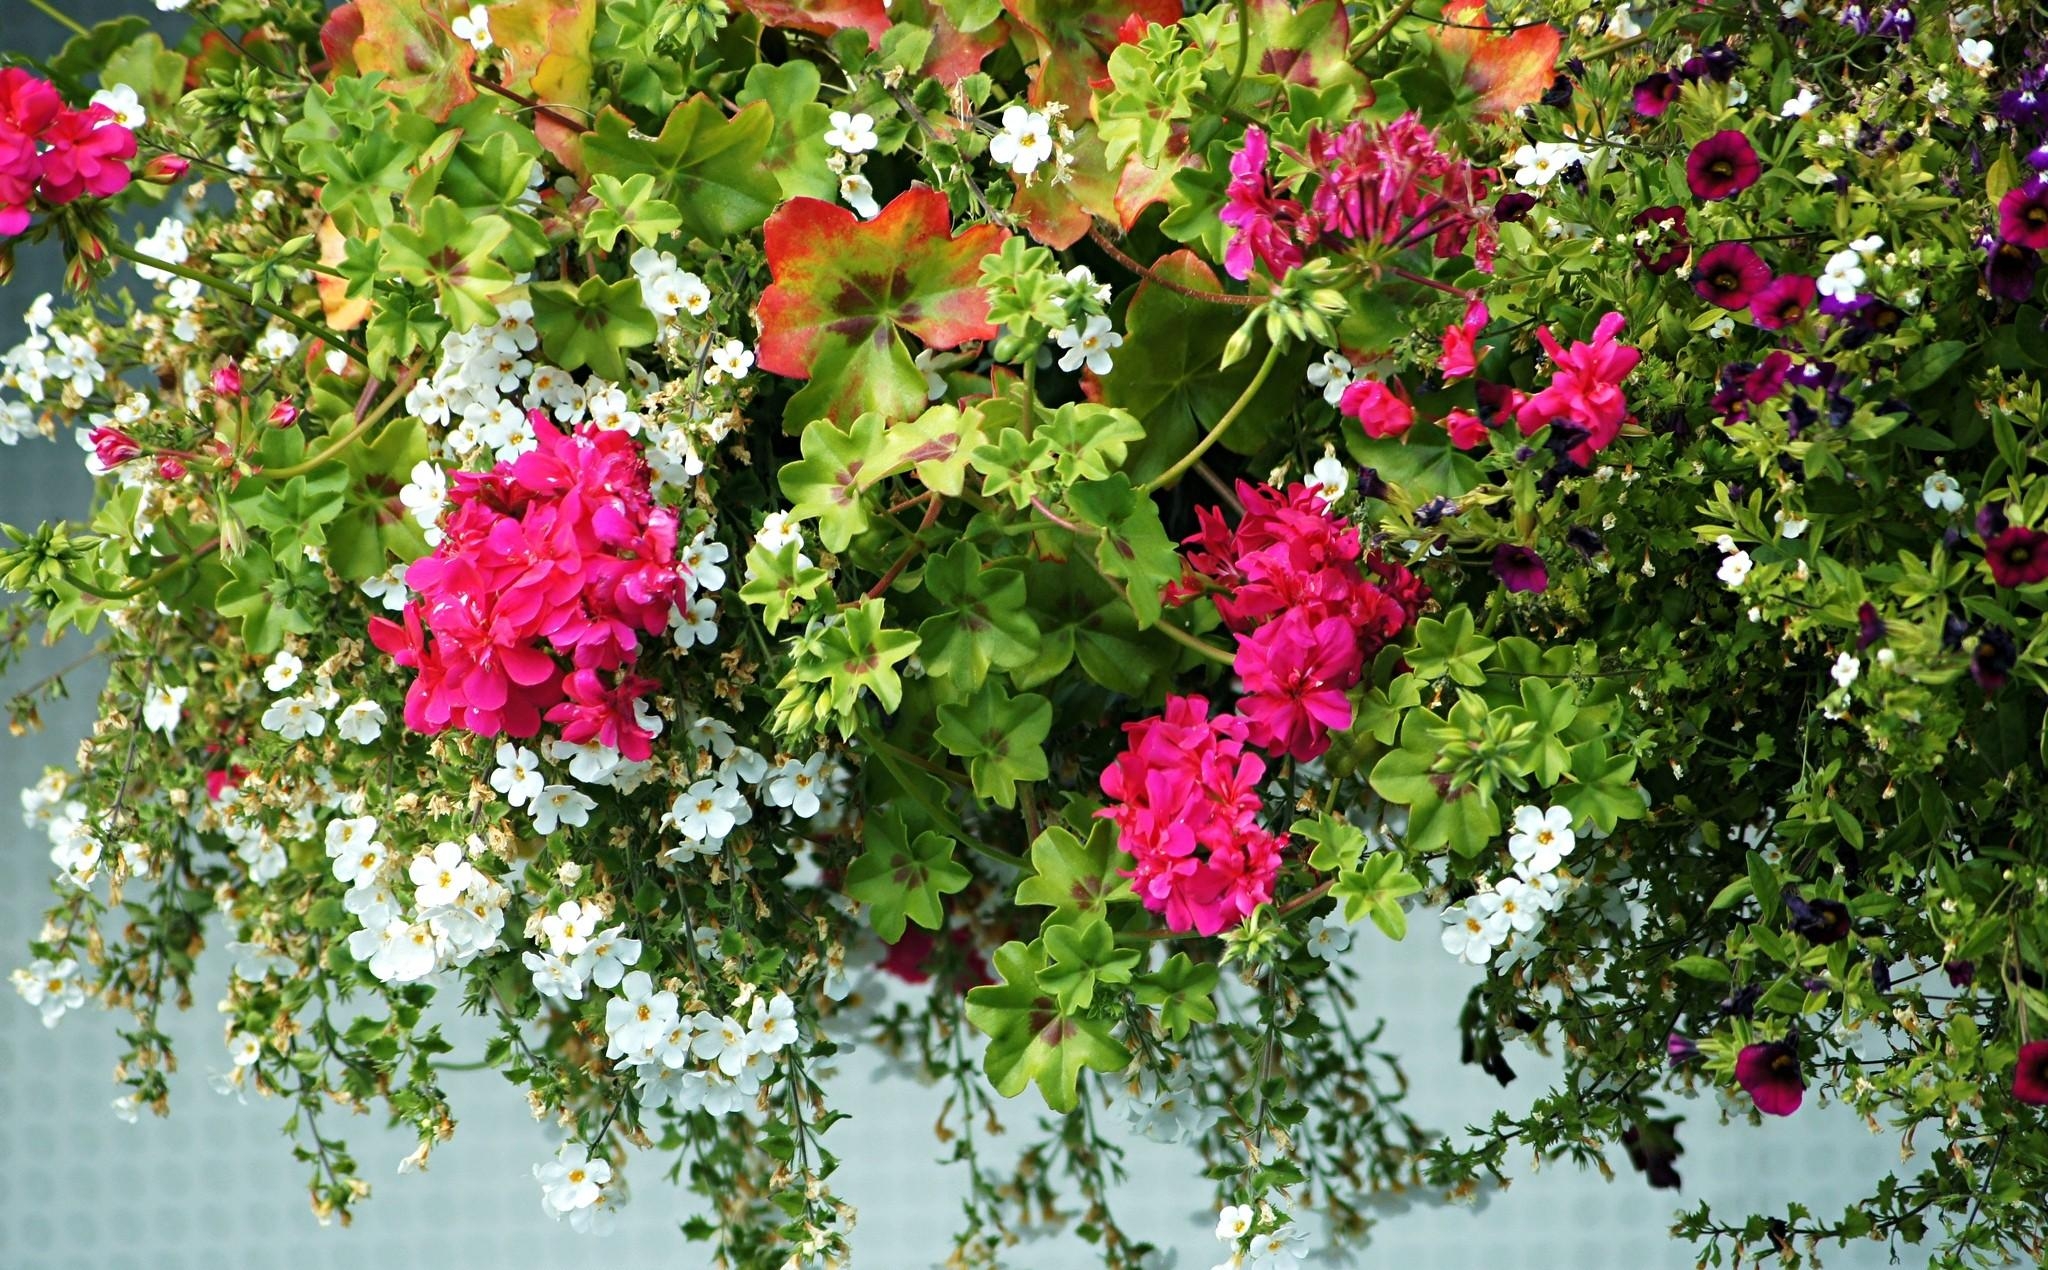 Cool HD Wallpaper handsomely, geranium, flowers, petunia